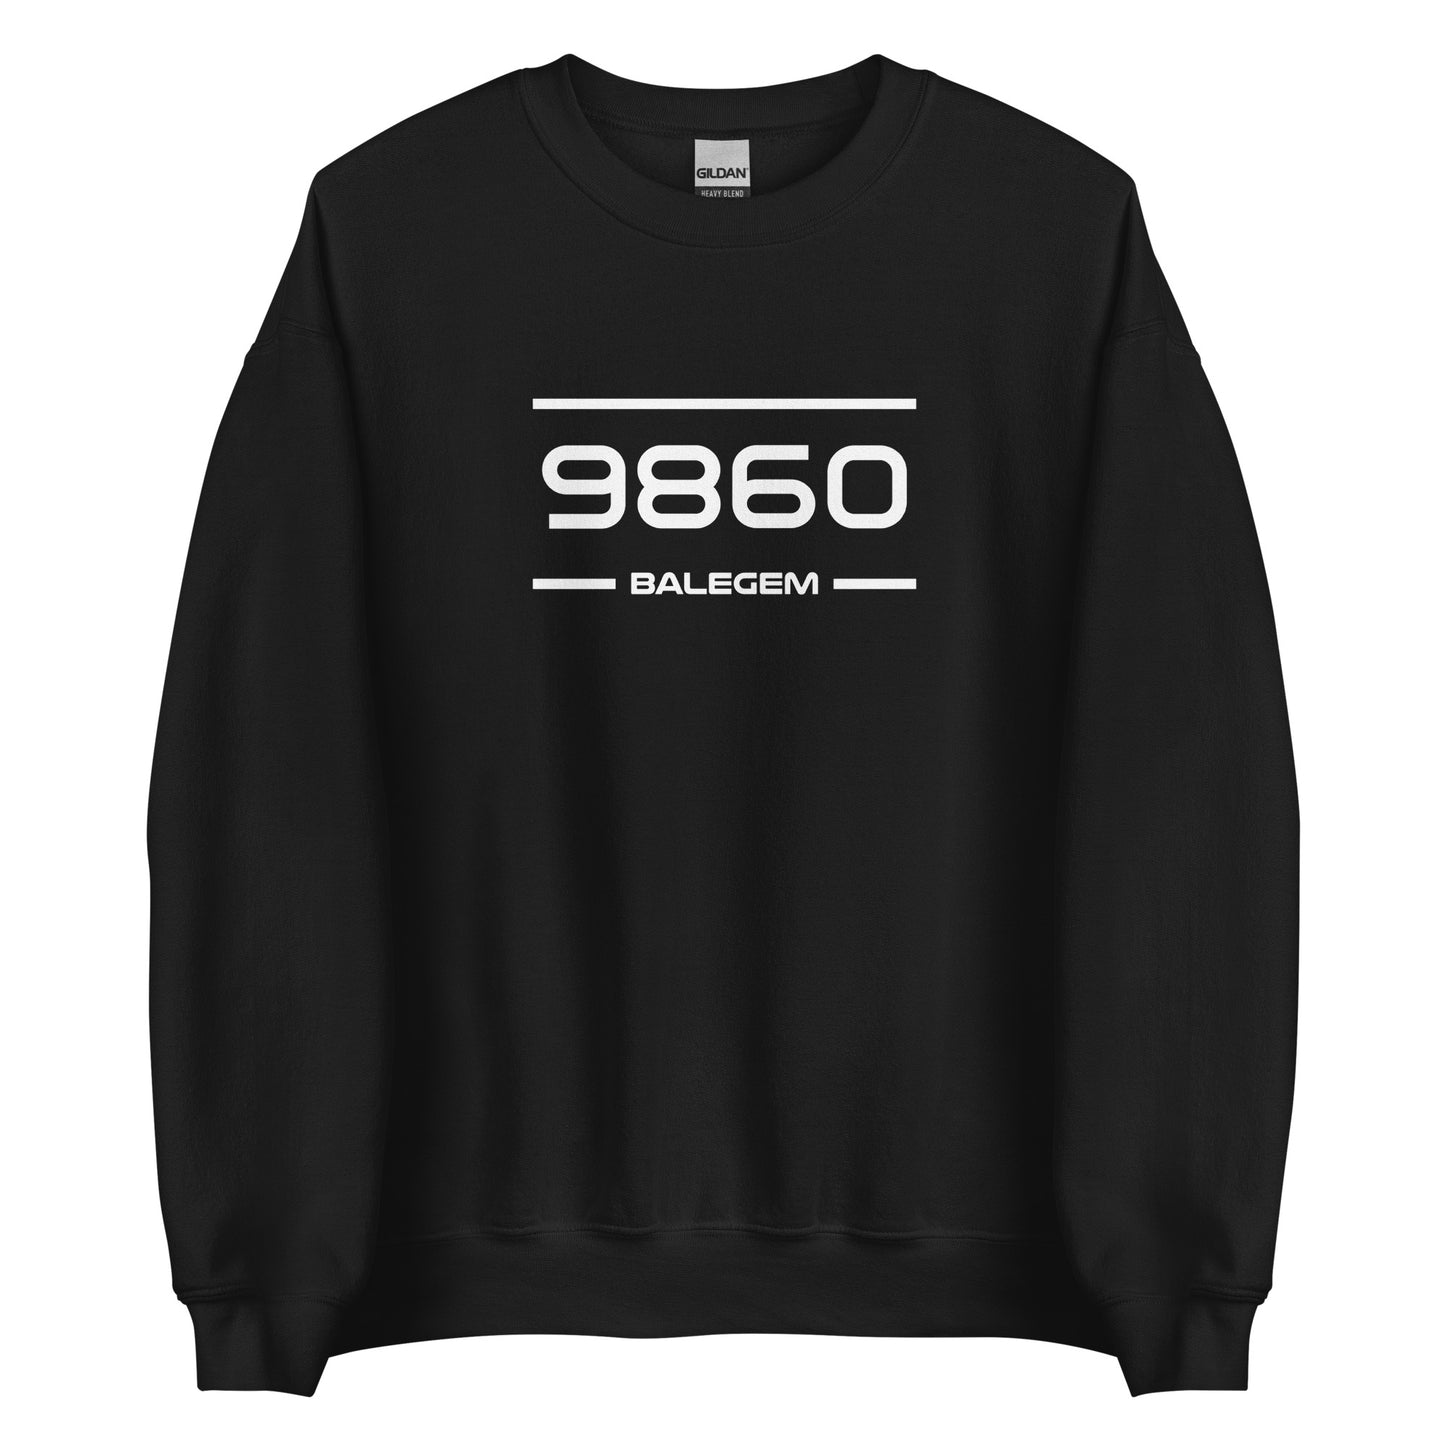 Sweater - 9860 - Balegem (M/V)